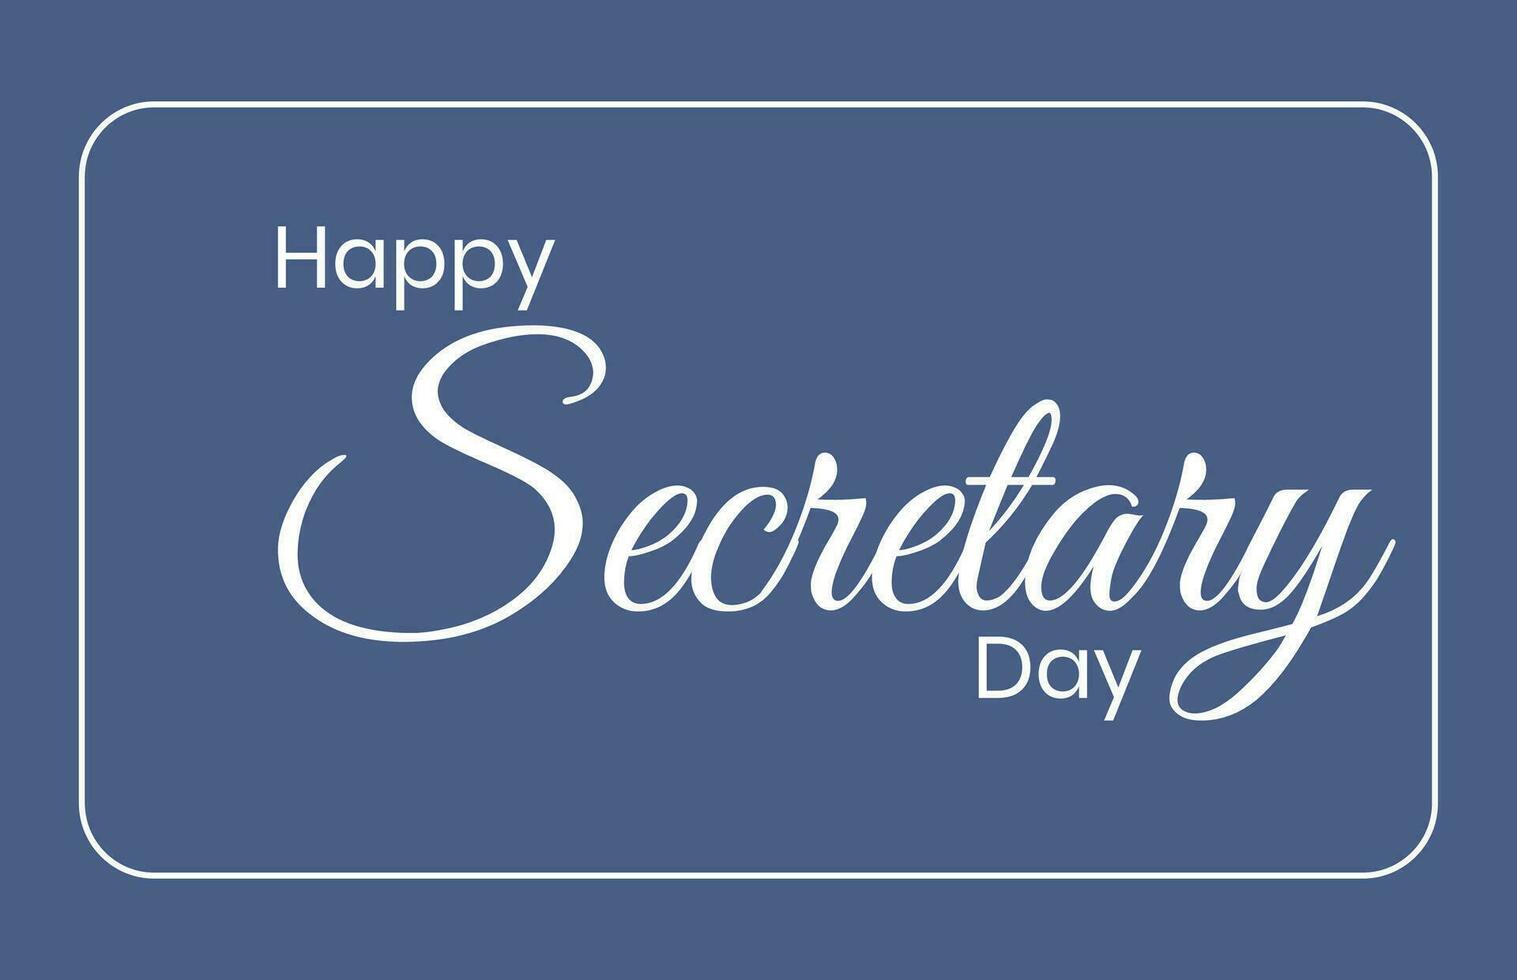 nationell sekreterare dag, administration dag, Semester begrepp vektor